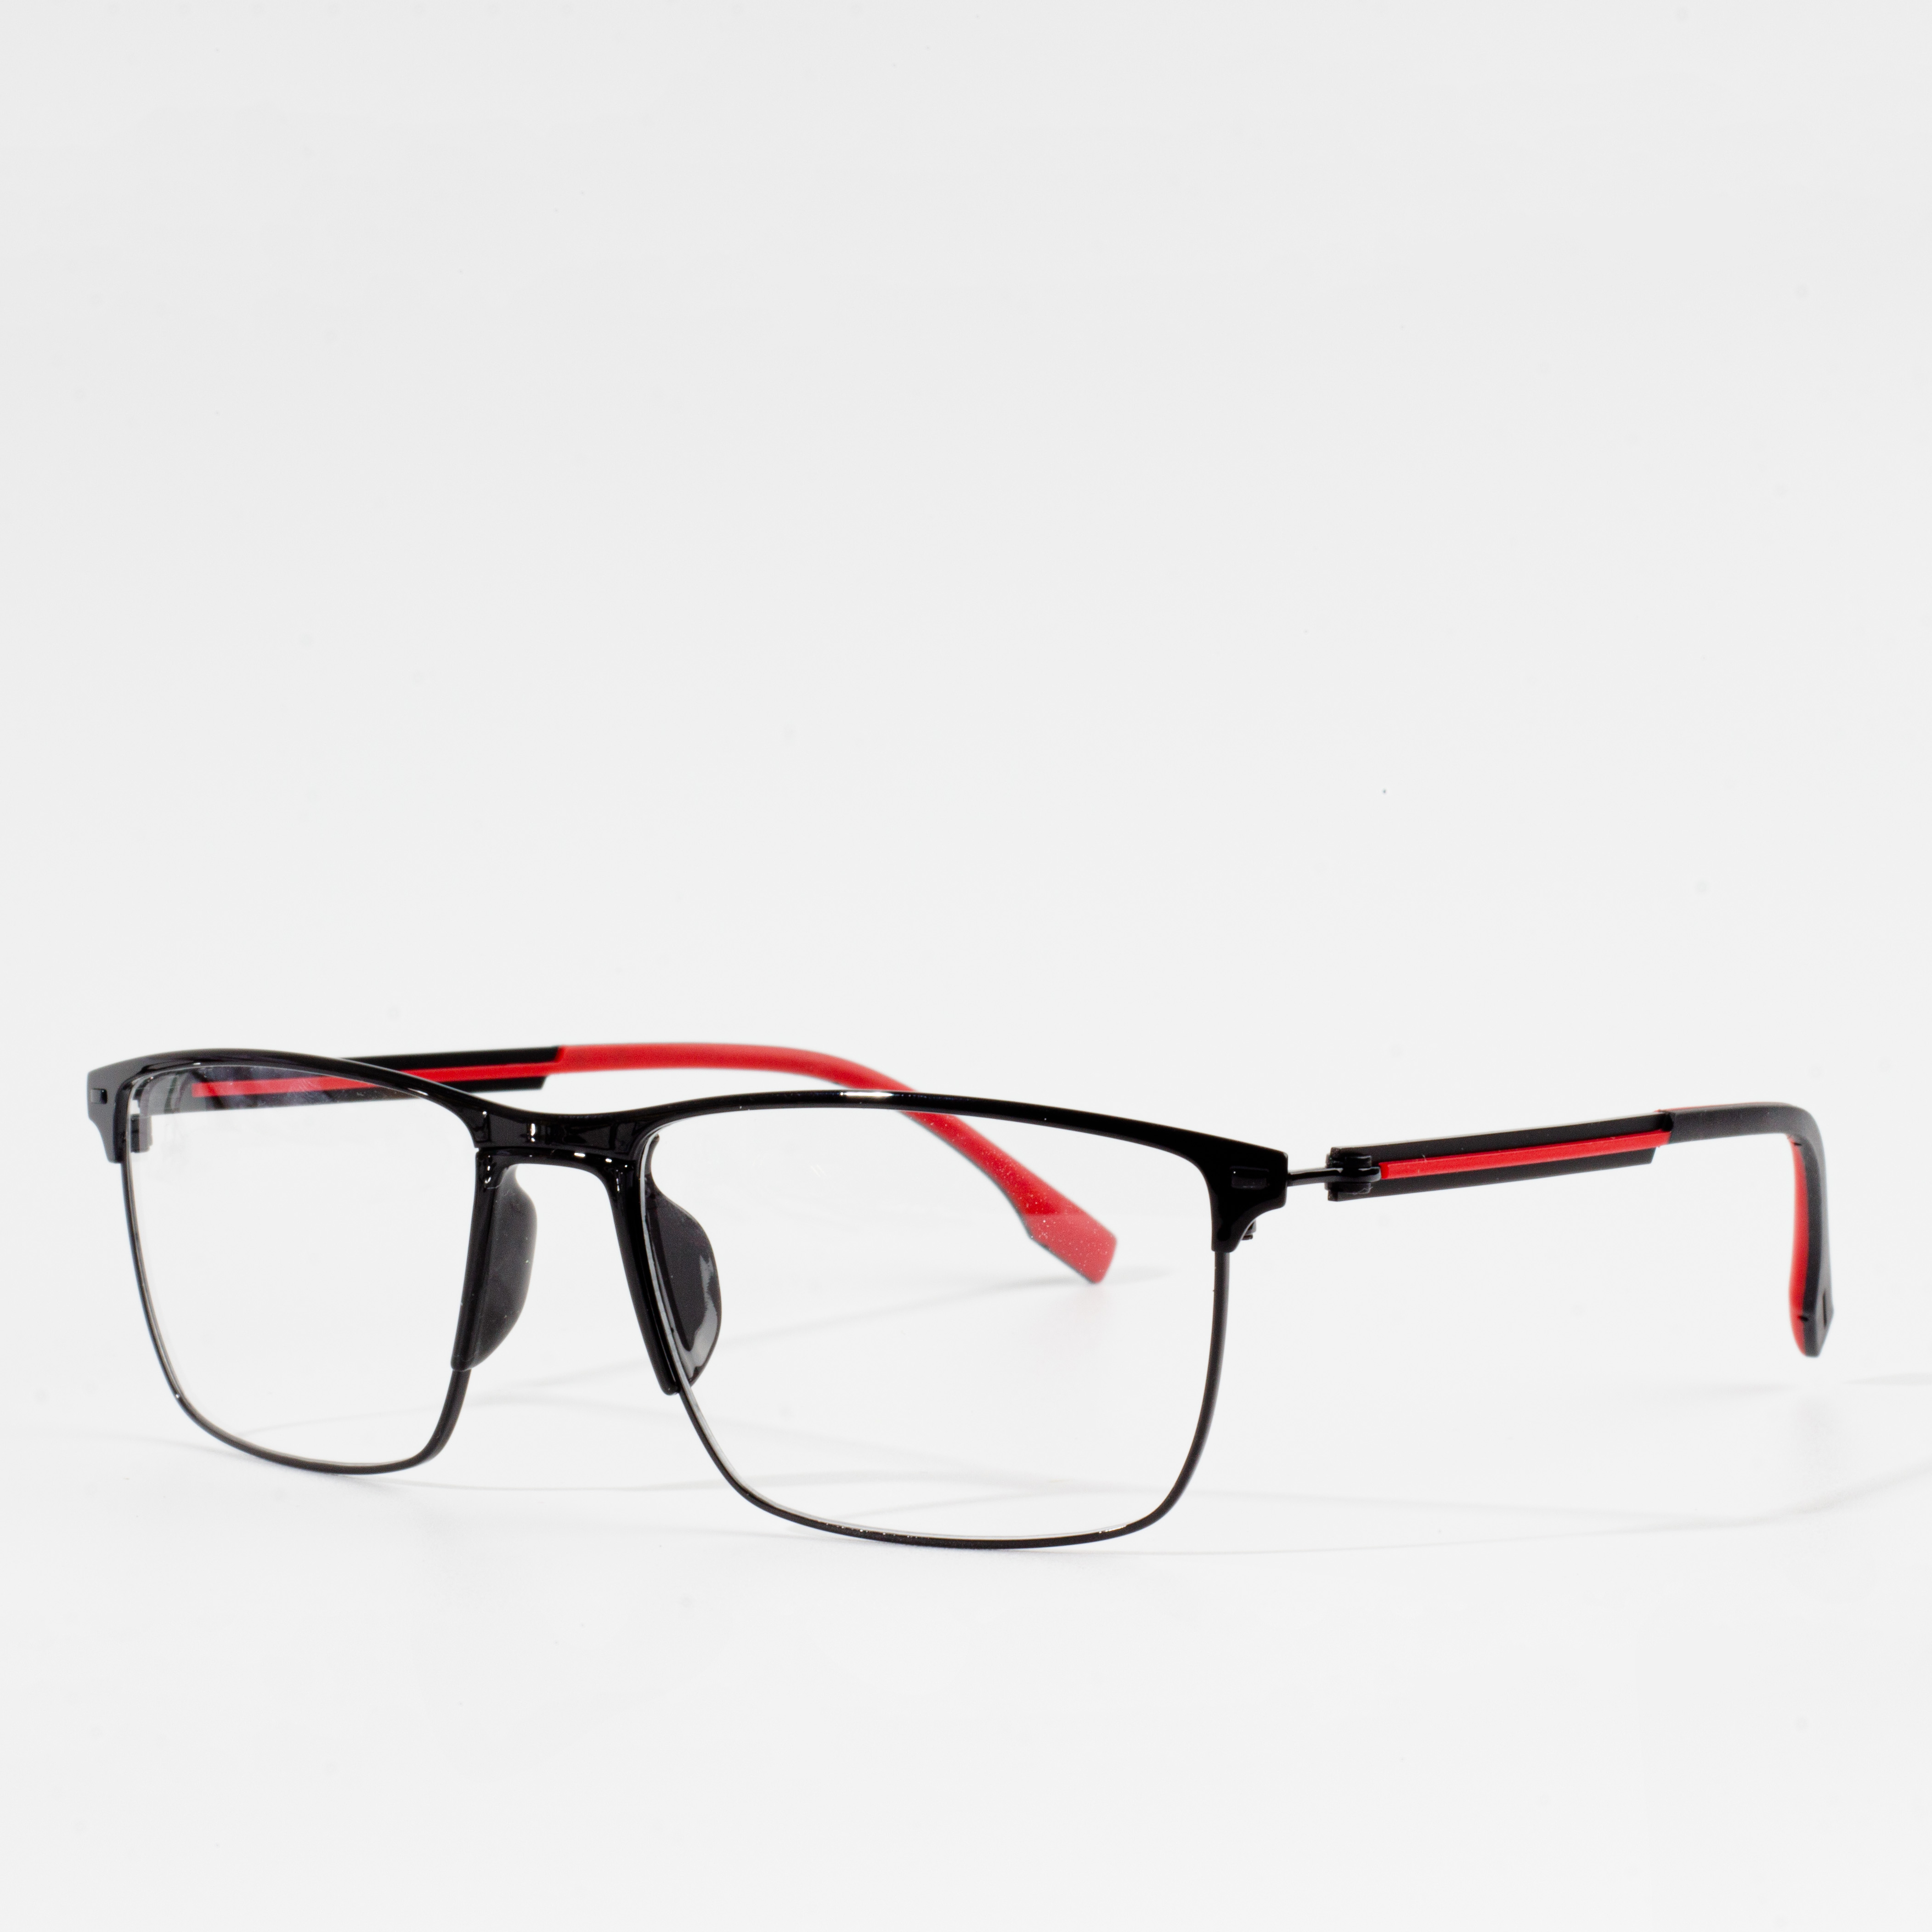 Bingkai Kacamata Untuk Pria